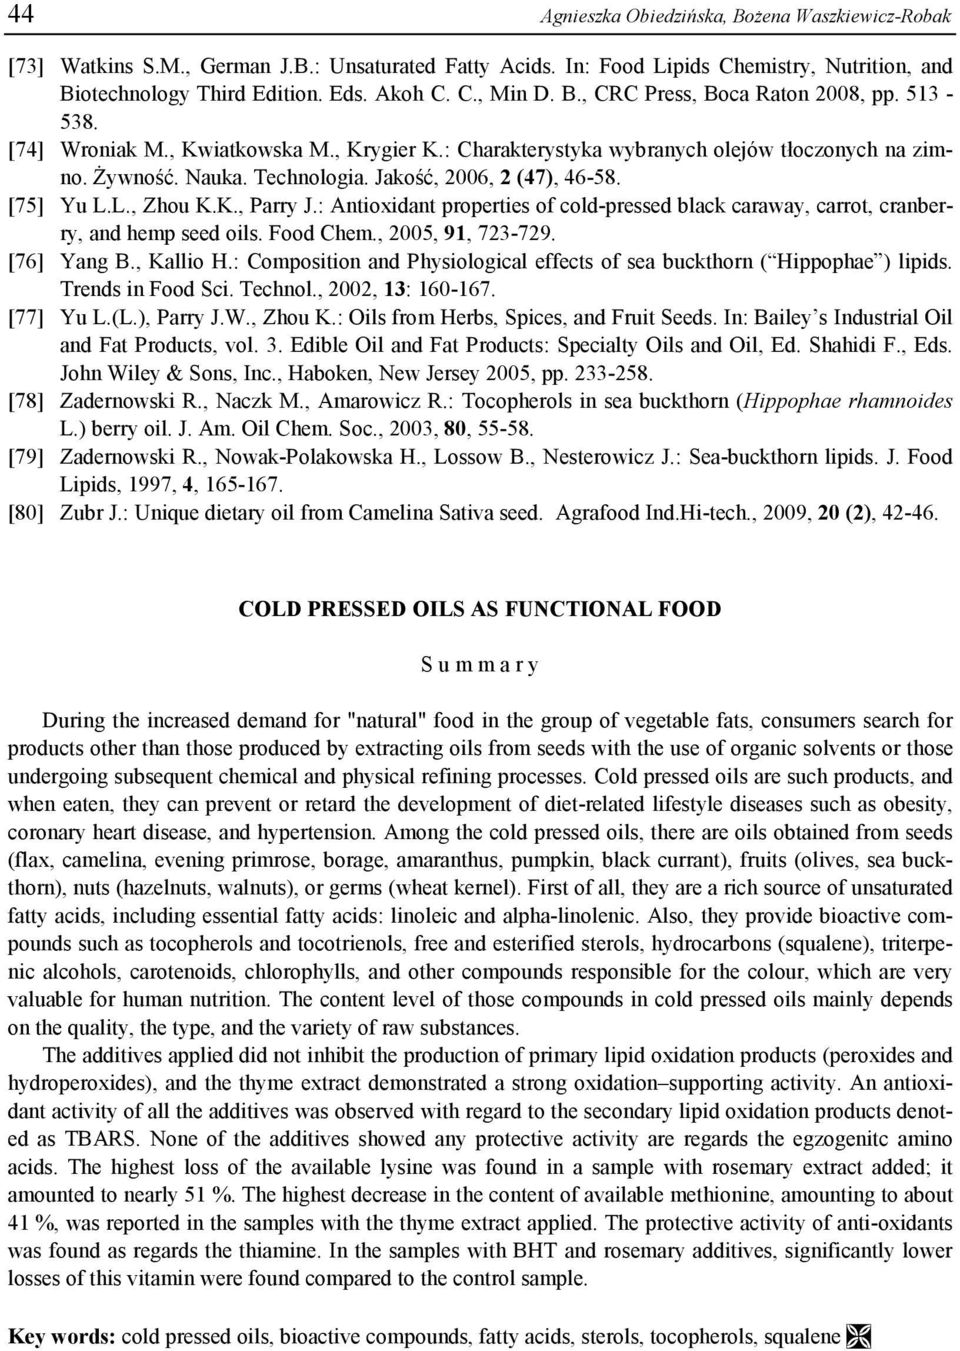 Jakość, 2006, 2 (47), 46-58. [75] Yu L.L., Zhou K.K., Parry J.: Antioxidant properties of cold-pressed black caraway, carrot, cranberry, and hemp seed oils. Food Chem., 2005, 91, 723-729. [76] Yang B.